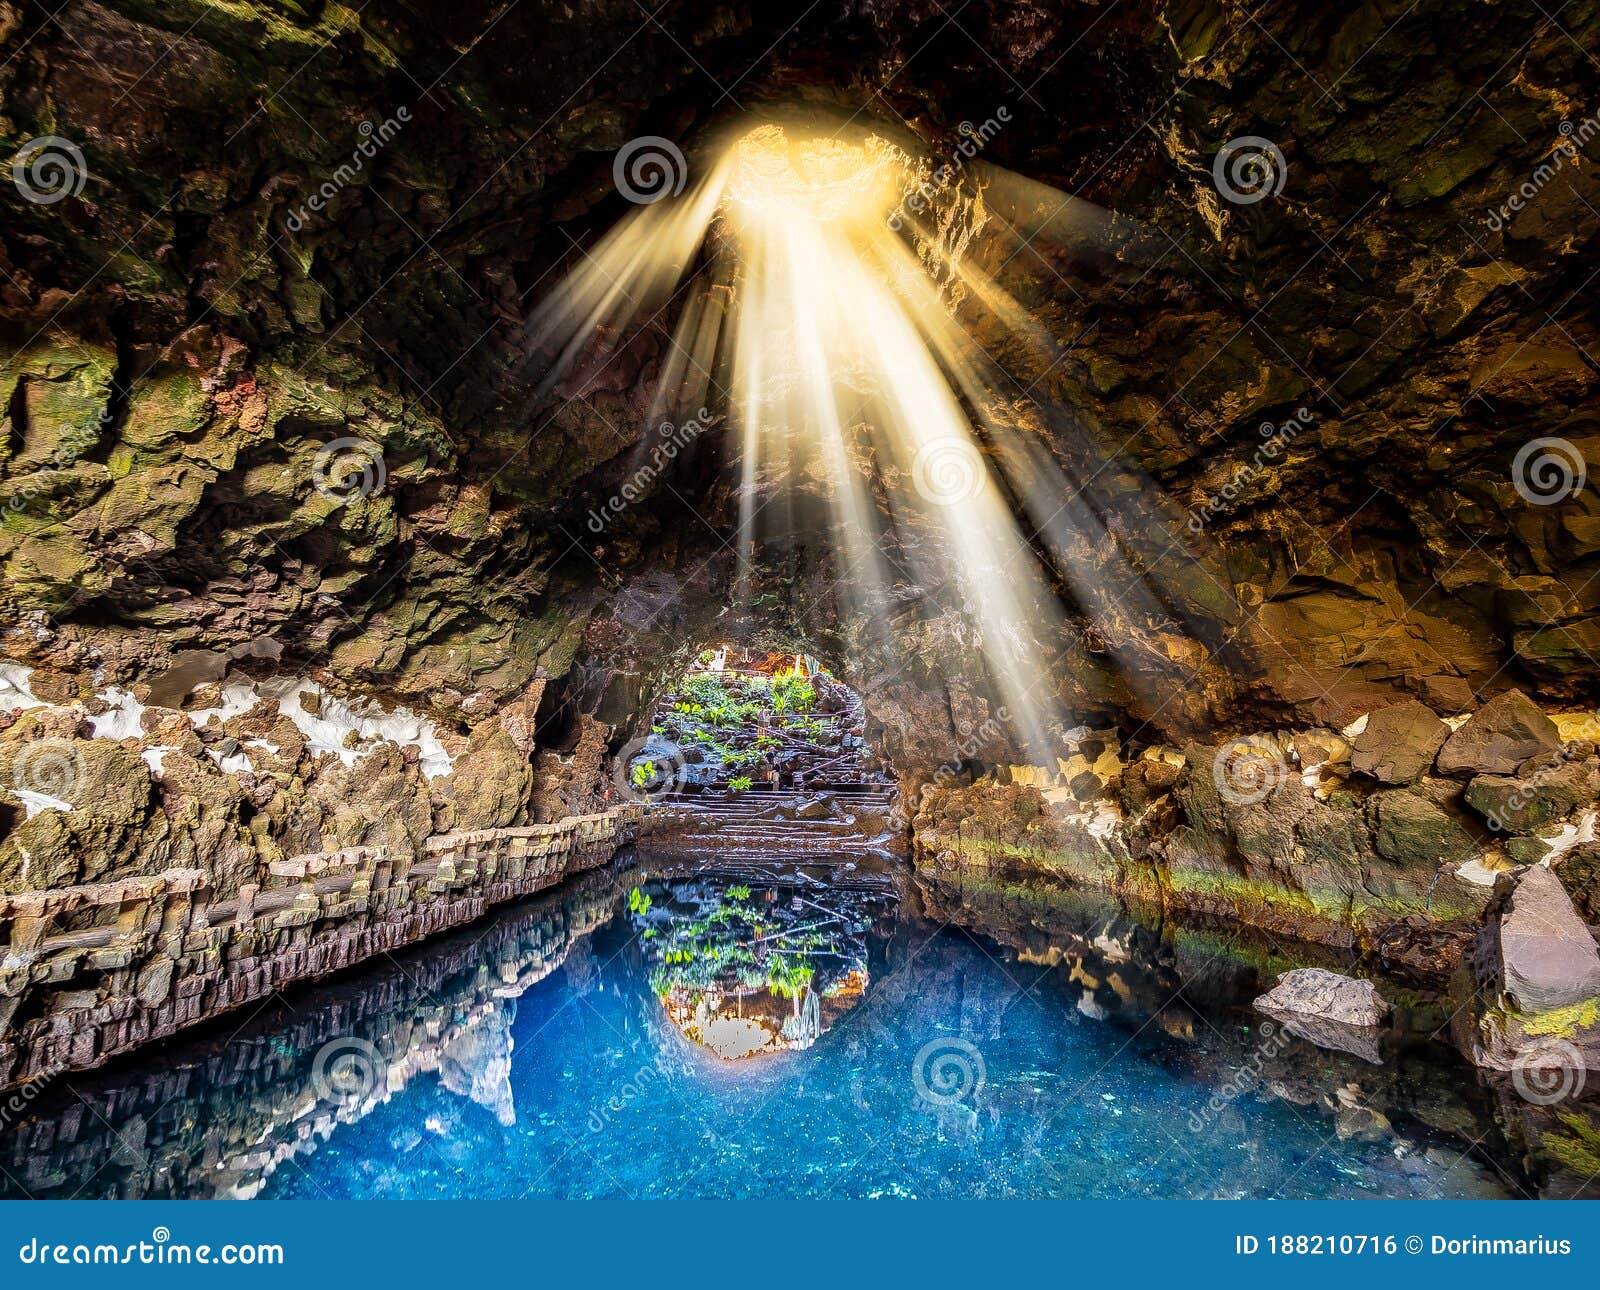 cave jameos del agua, natural cave and pool